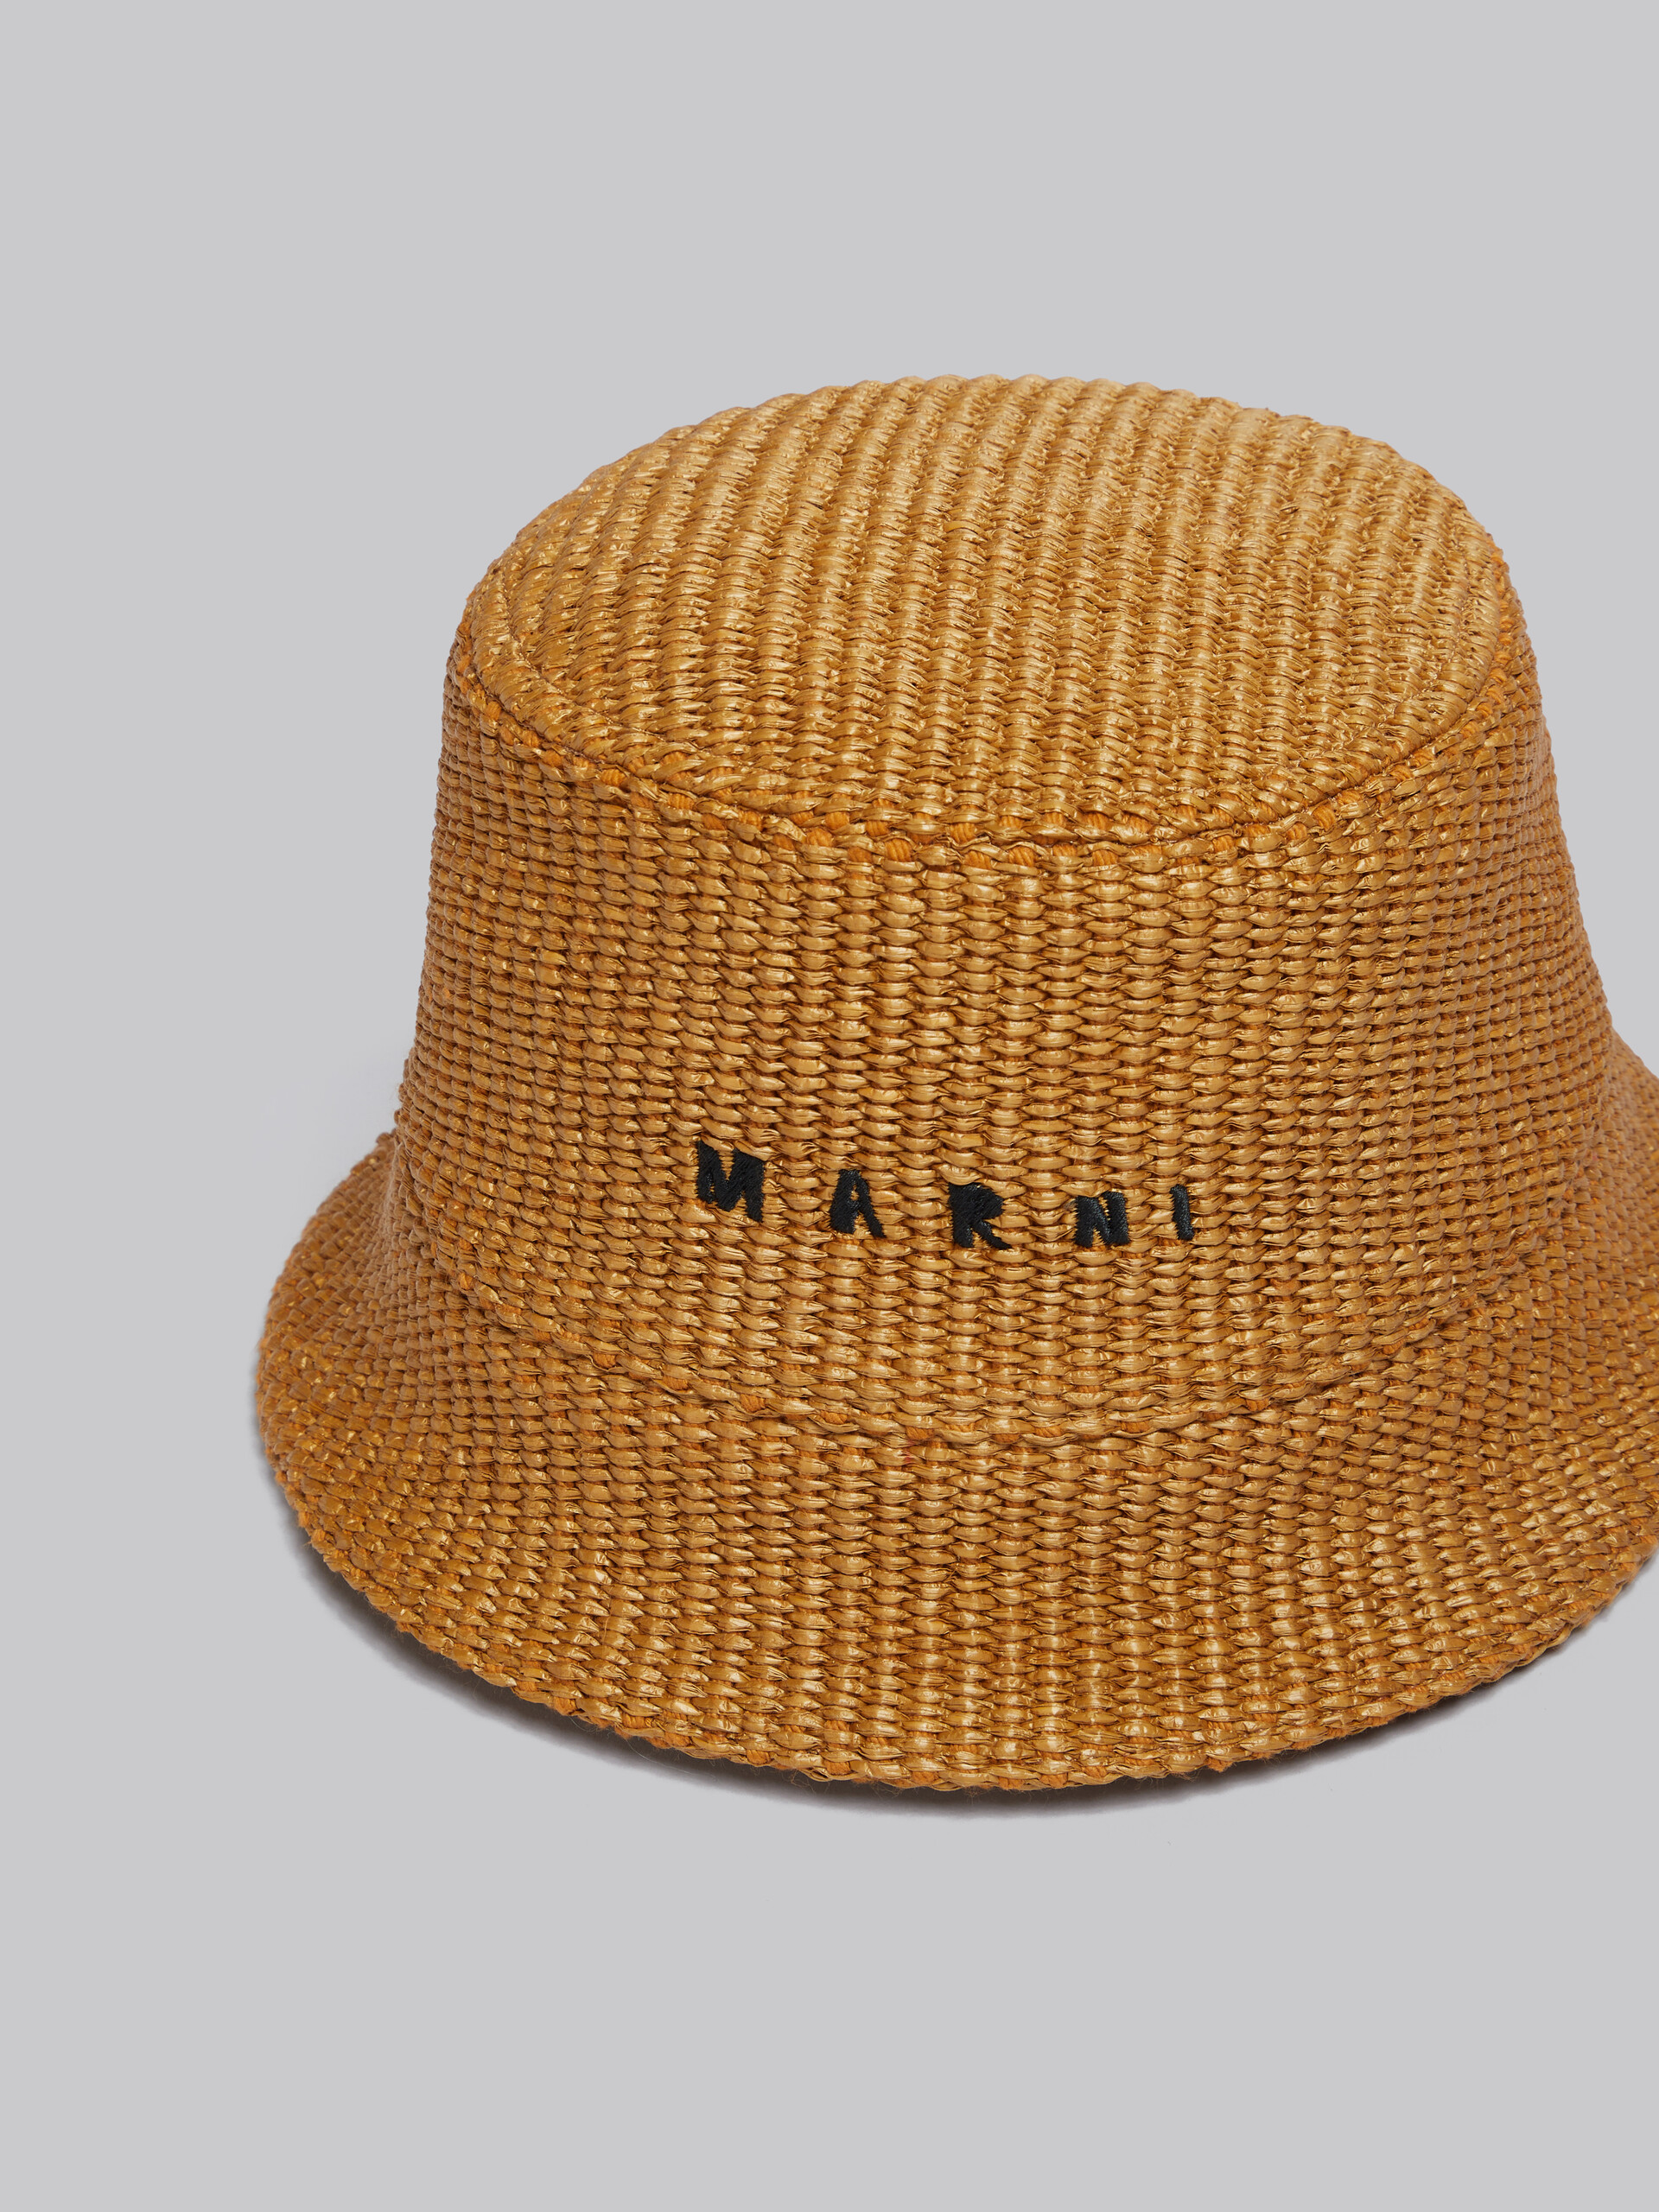 Gorro de pescador marrón de rafia con logotipo bordado - Sombrero - Image 3